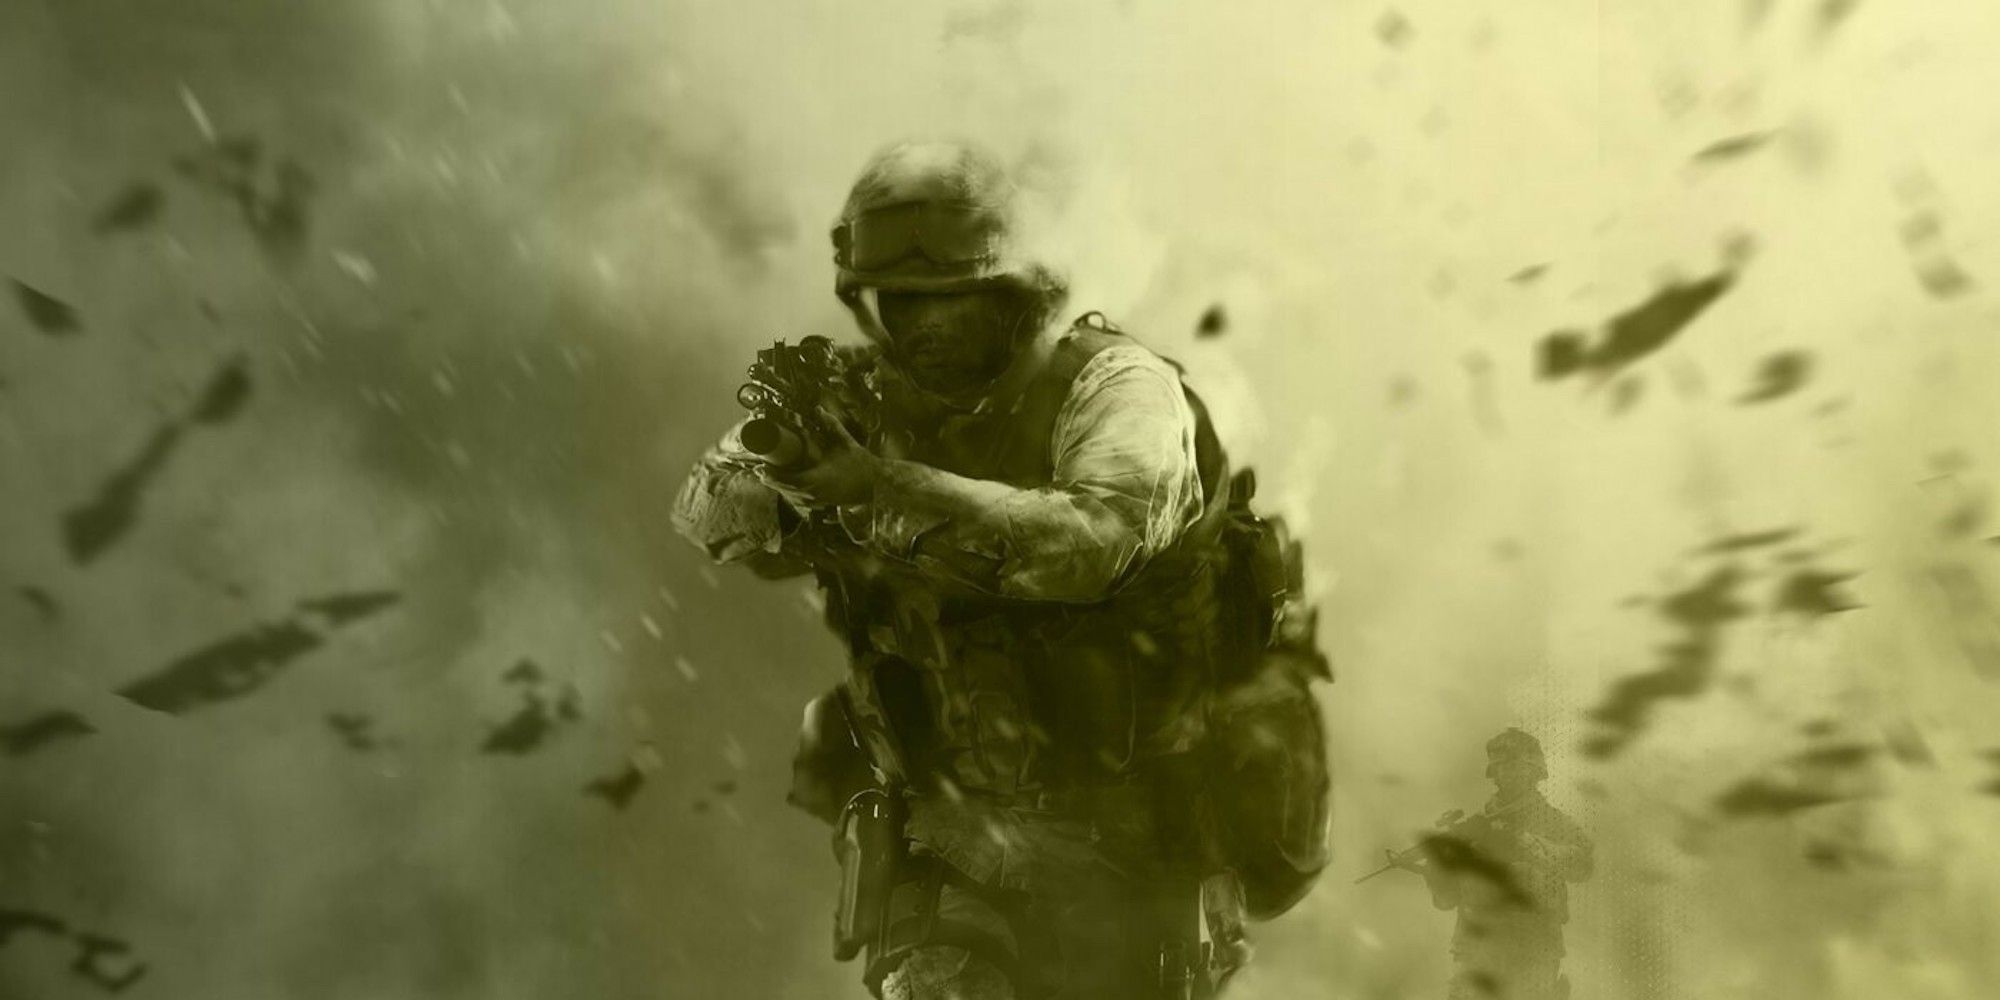 Promo art featuring a random soldier from Call Of Duty 4: Modern Warfare 